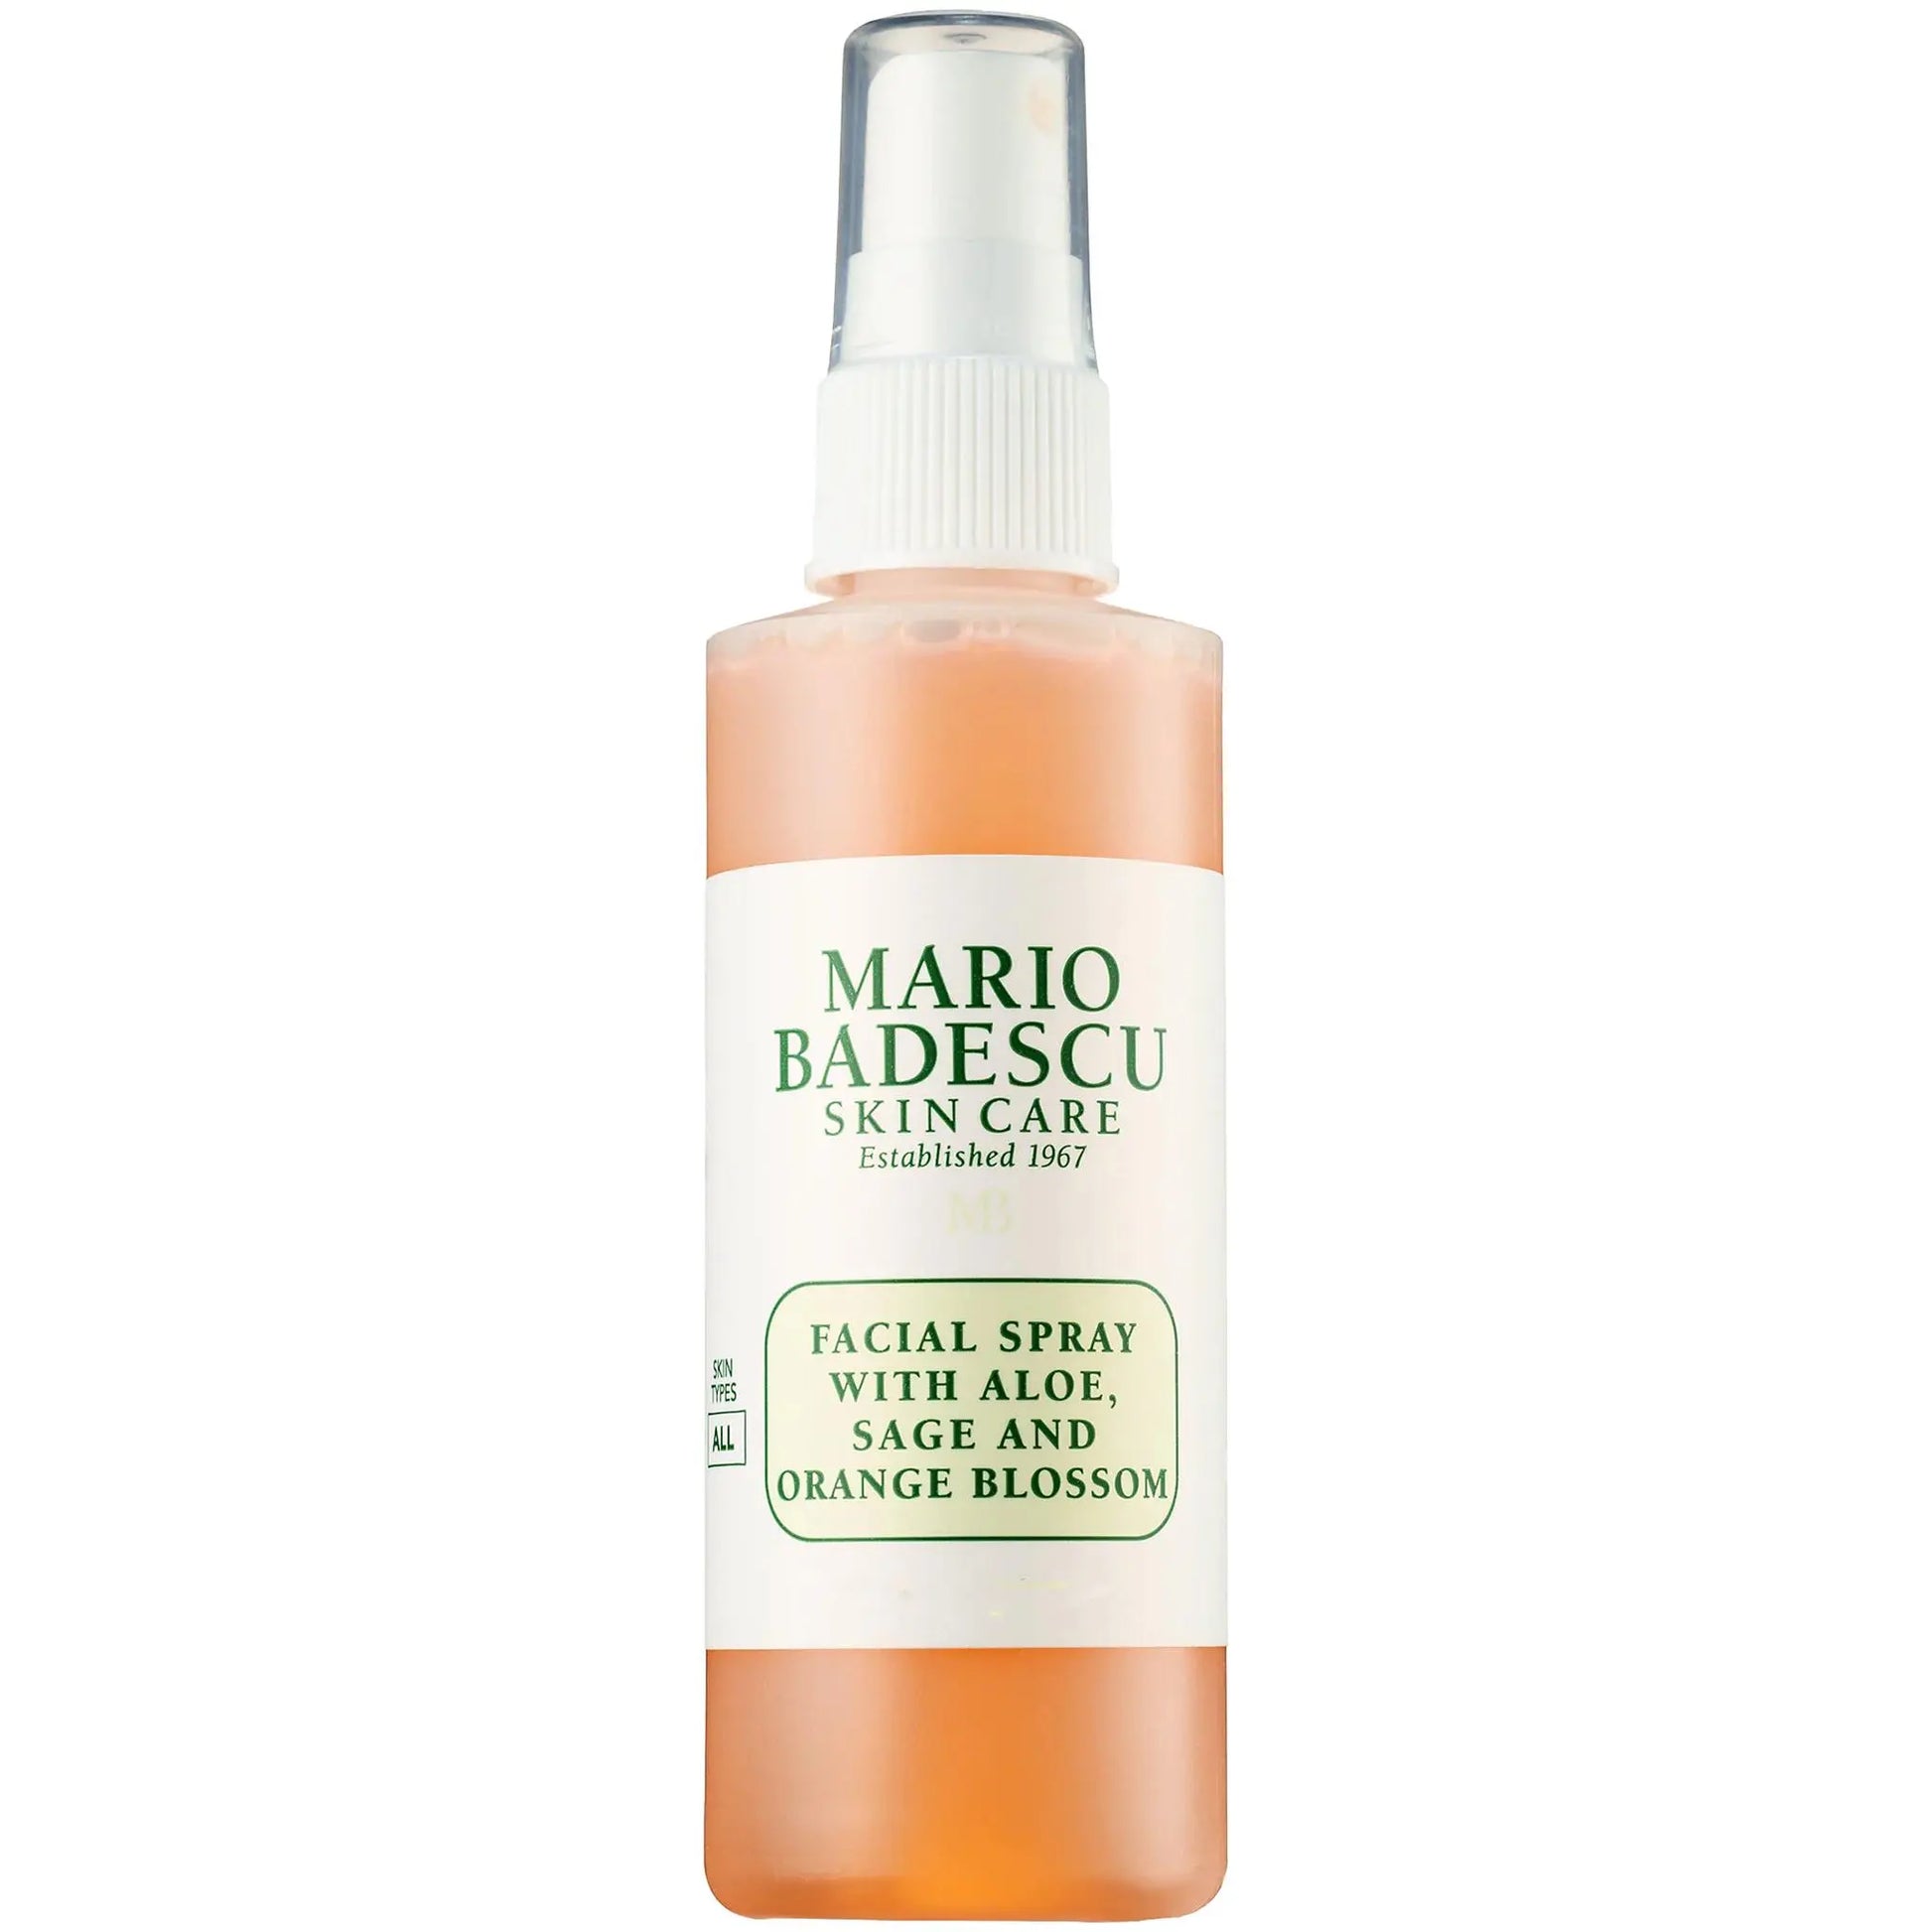 MARIO BADESCU Facial Spray with Aloe, Sage And Orange Blossom 29ML Mario Badescu